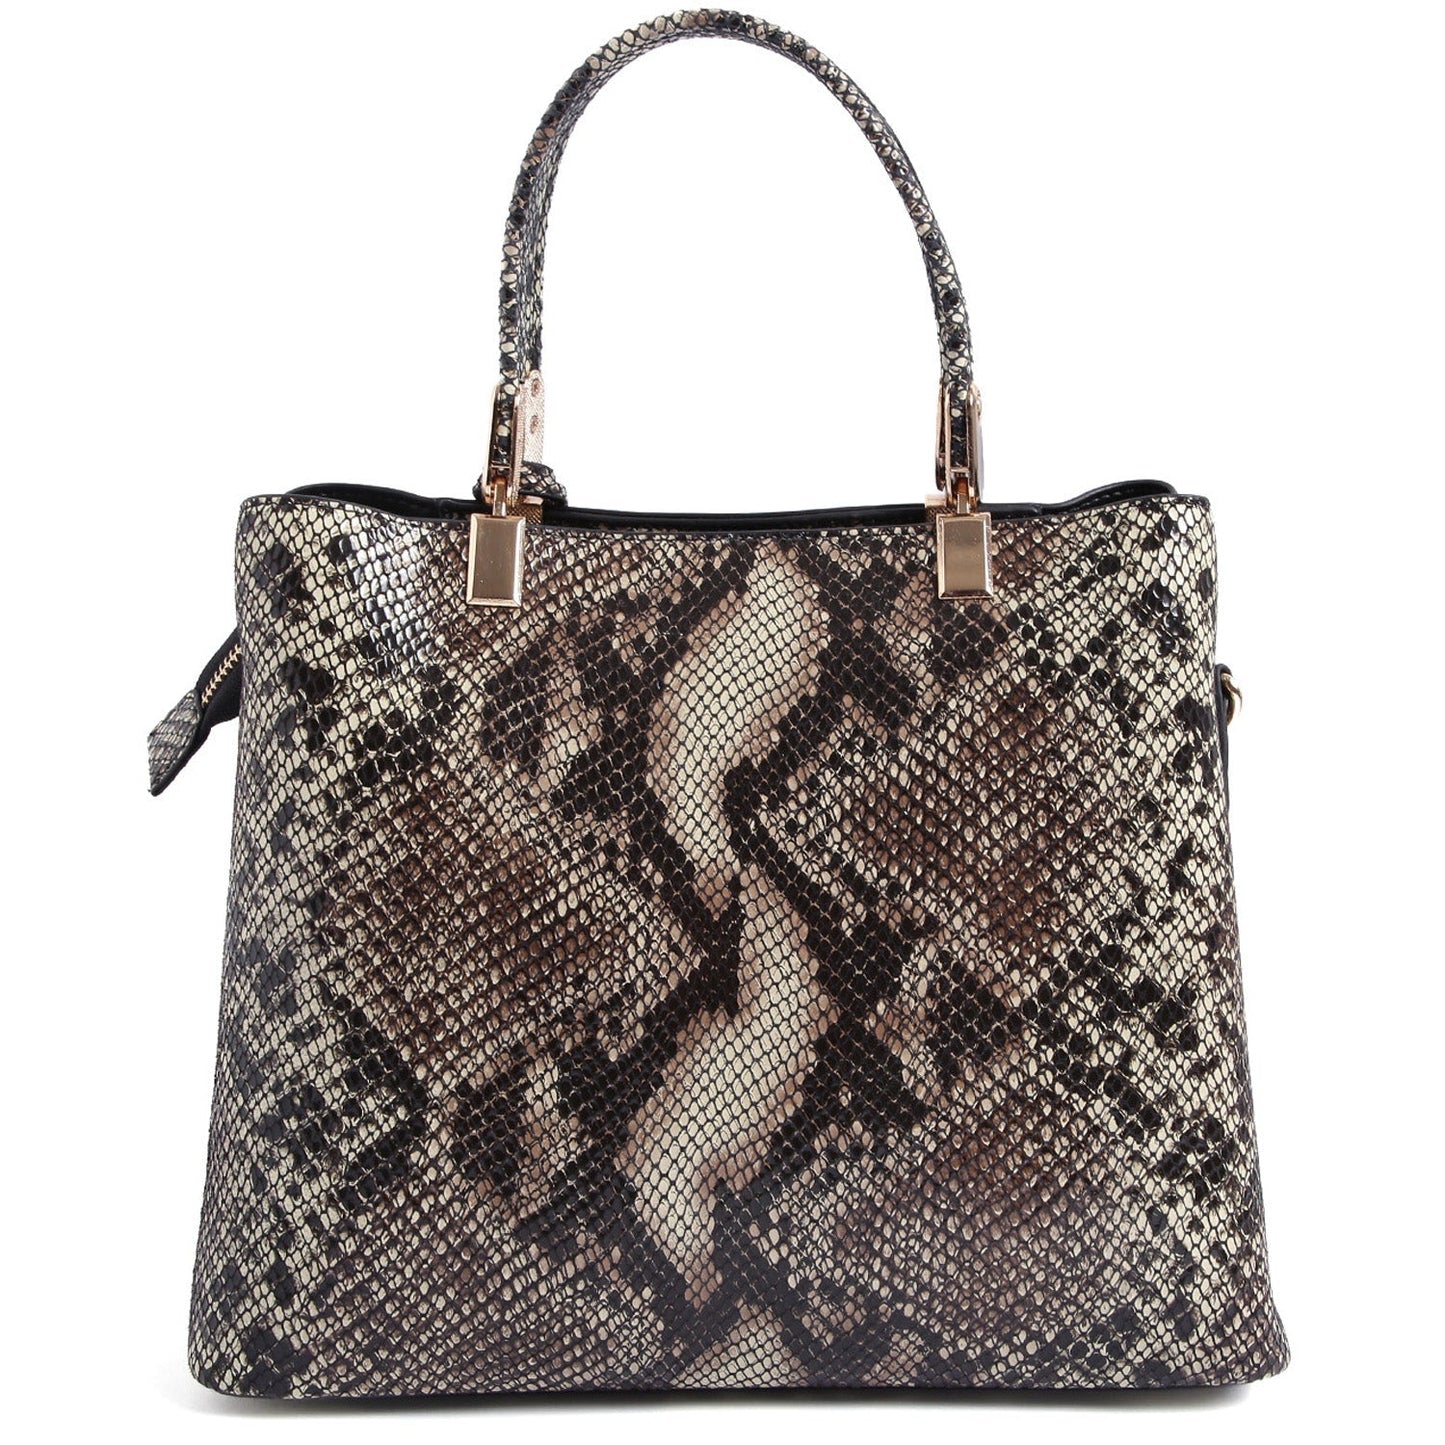 Elegant Top Grain Italian Leather Ladies Handbag/Satchel Bag